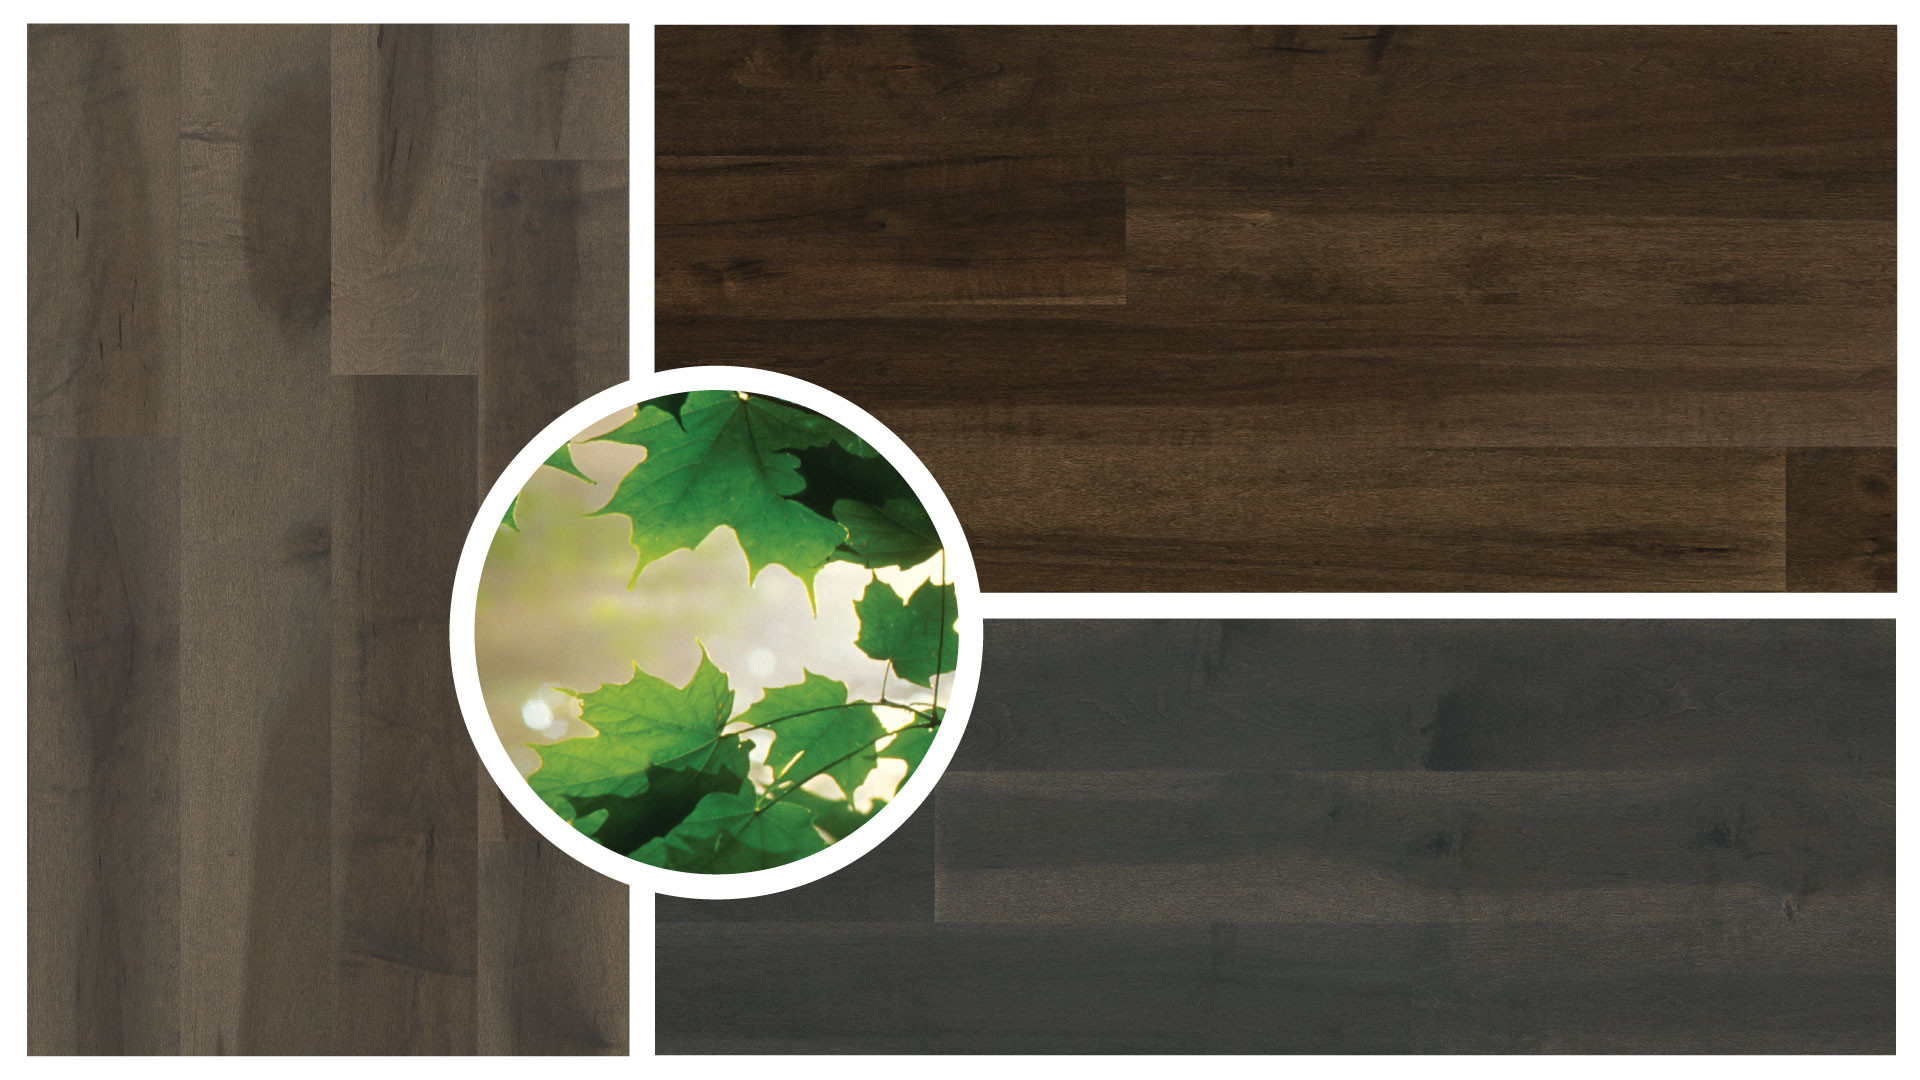 Most Popular Hardwood Floor Colors 2015 Of 4 Latest Hardwood Flooring Trends Lauzon Flooring Inside Elegant organik Series Hardwood Flooring Boasts Extensive tonal Variation for A Chameleon Effect Becoming Lighter or Darker Depending On the Lighting and